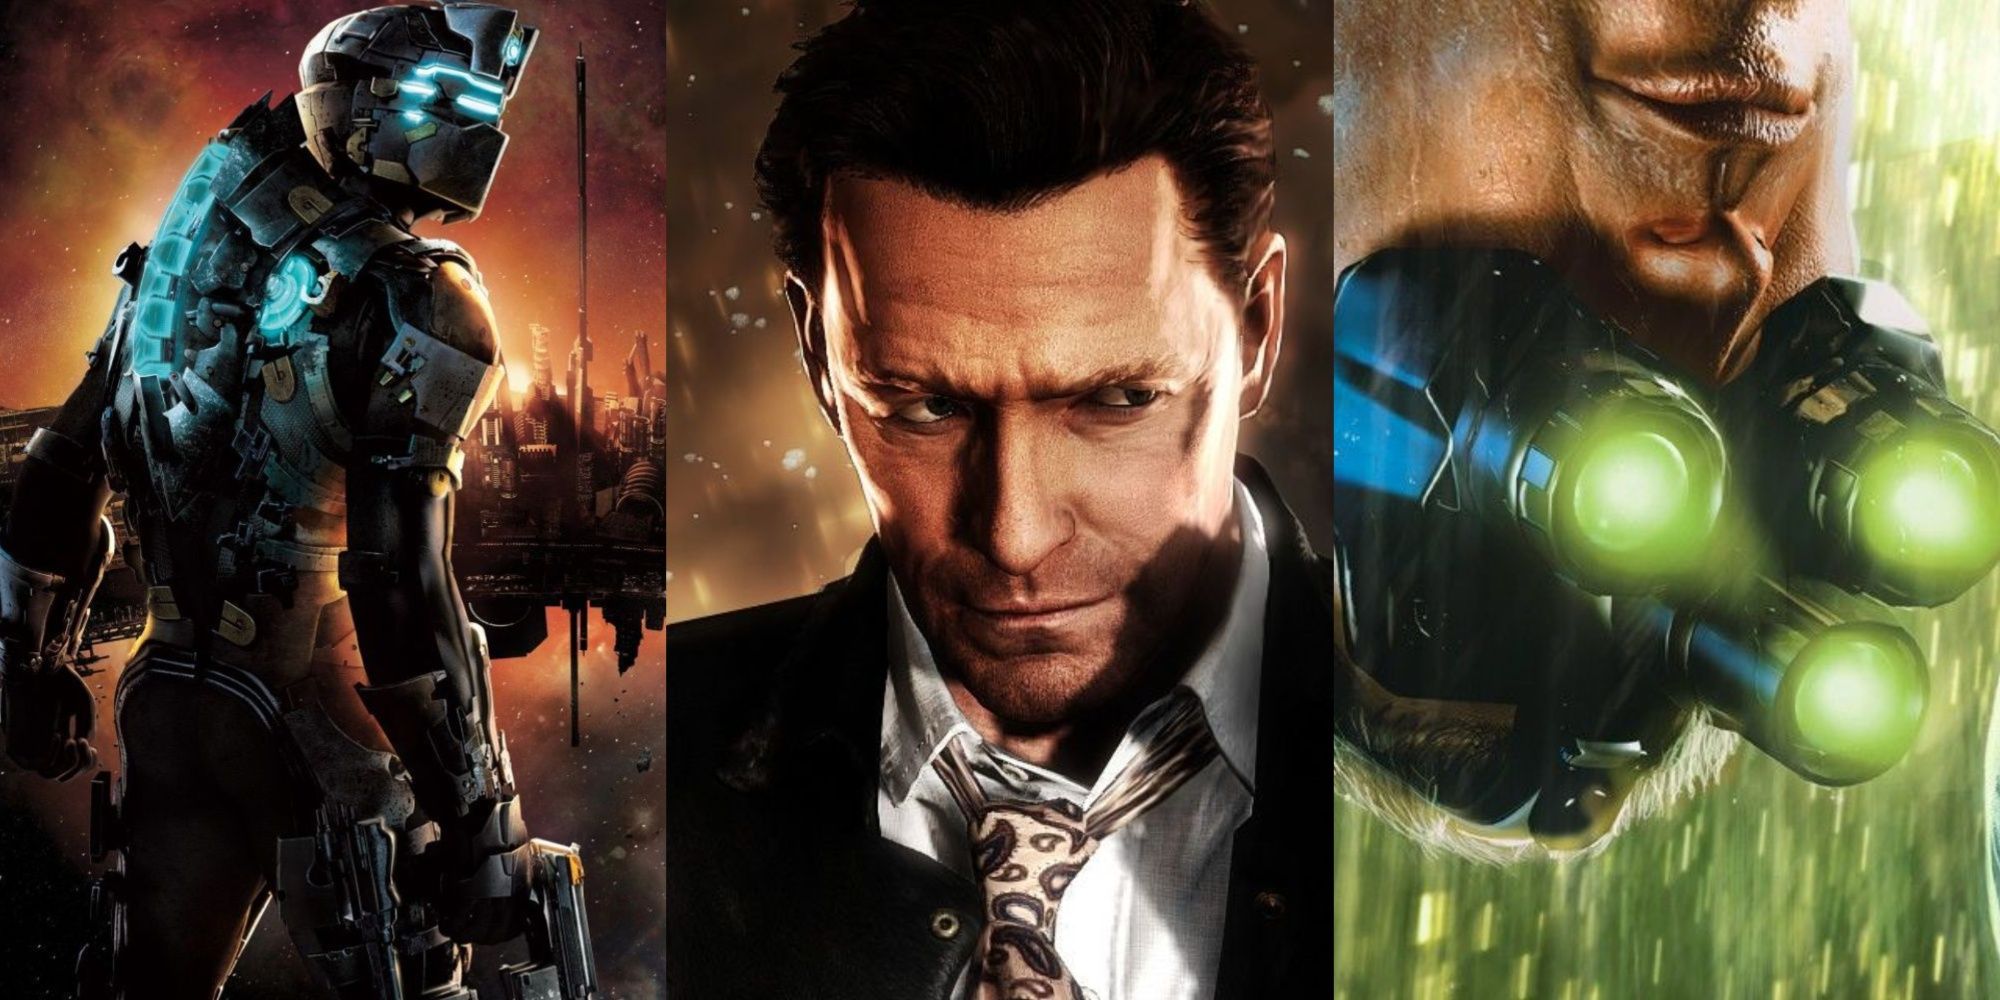 Splinter Cell Chaos Theory, Xbox One X vs Xbox, 4K Graphics Comparison